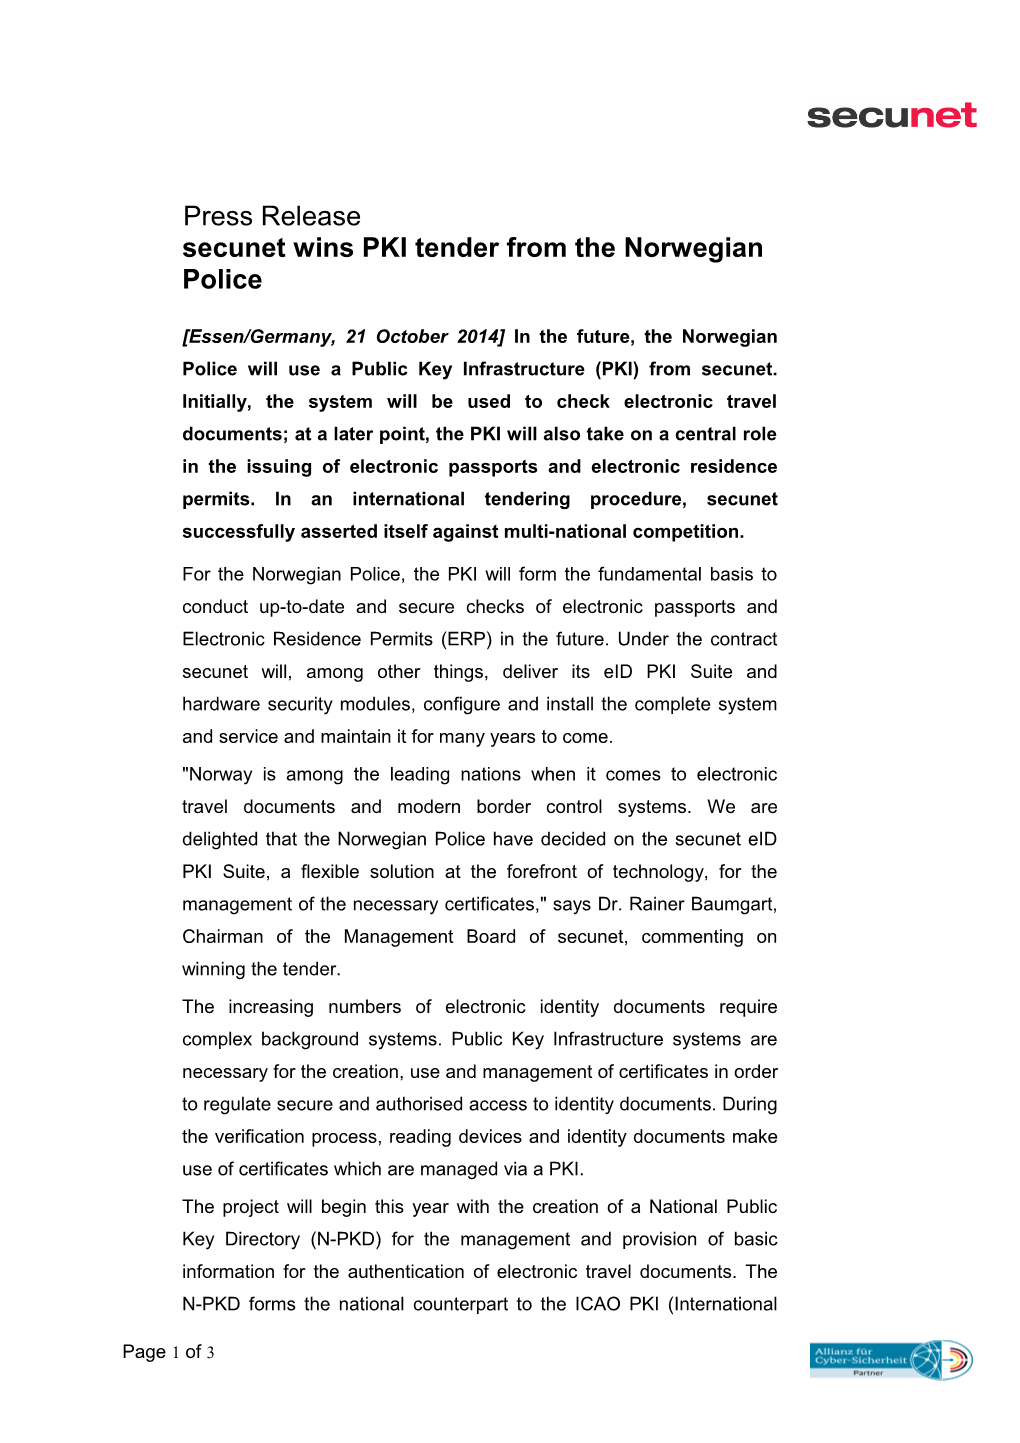 Secunet Wins PKI Tender from the Norwegian Police